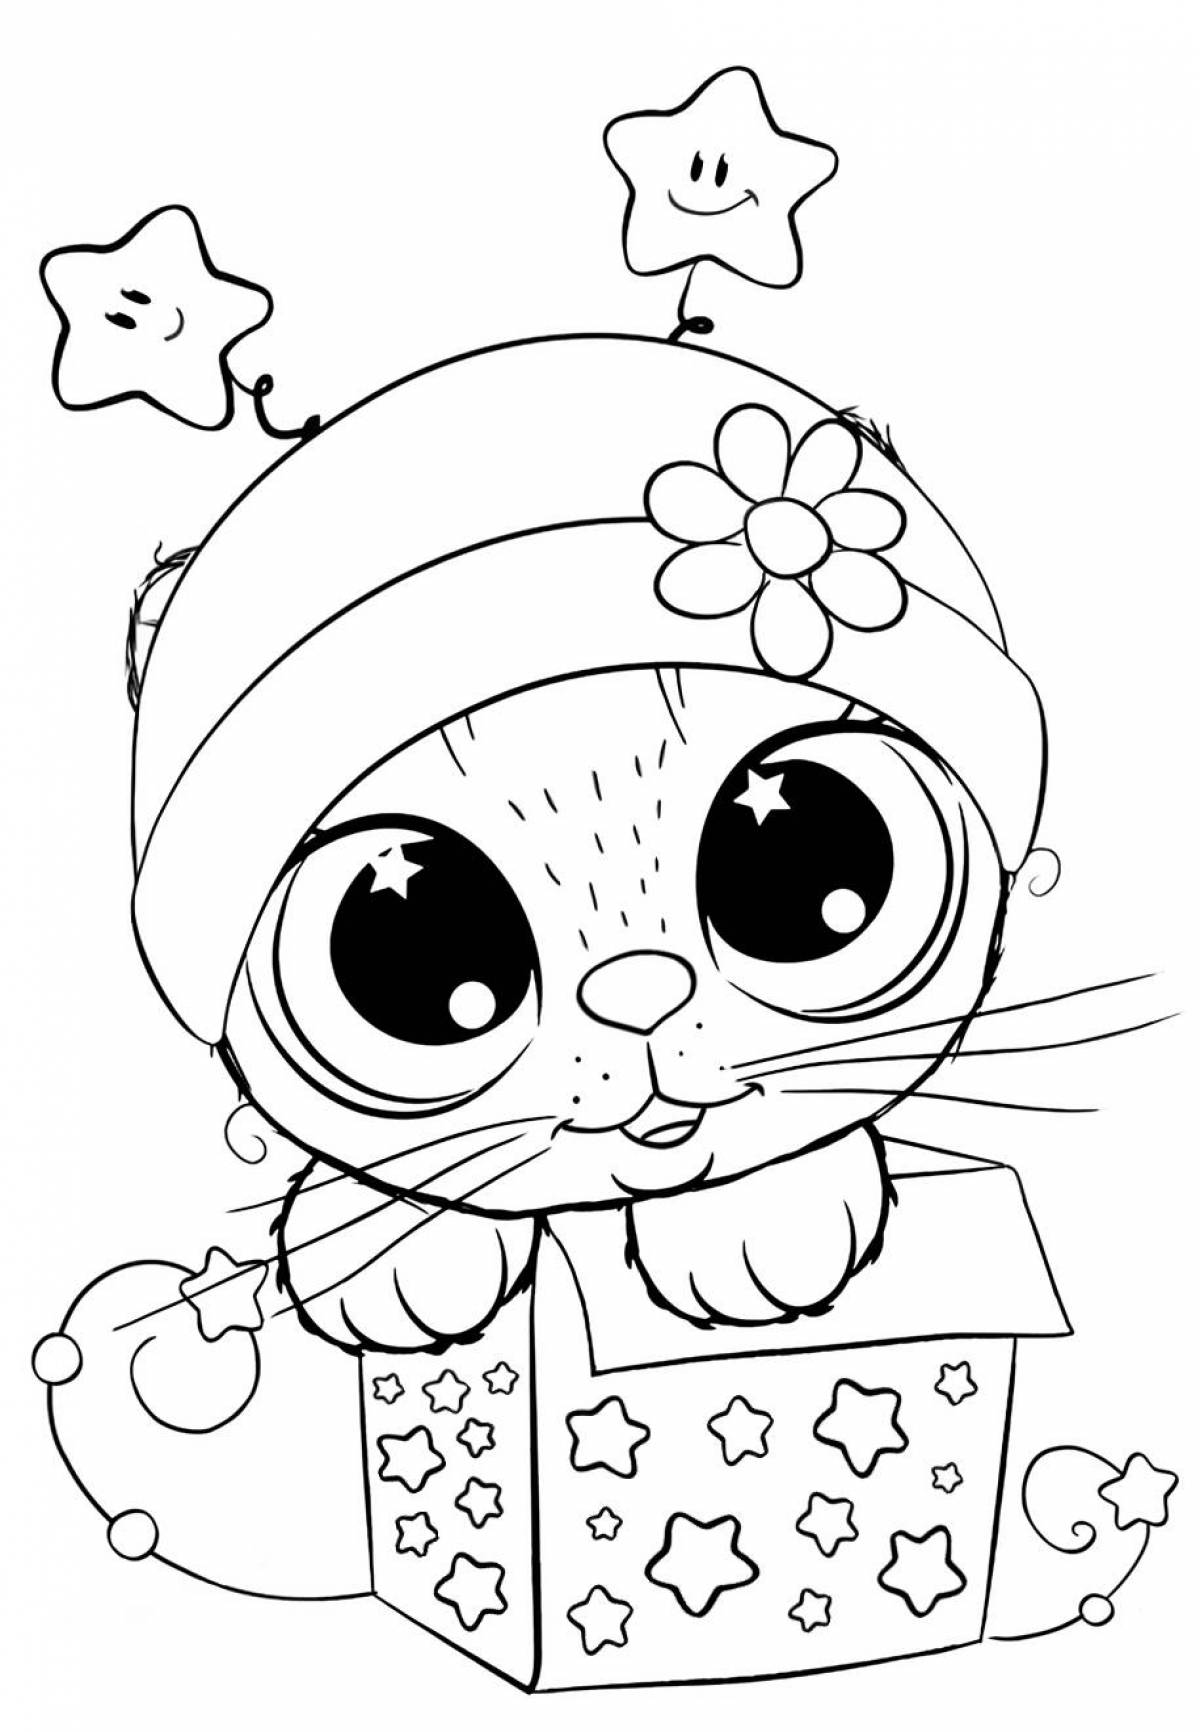 Precious kitten coloring page